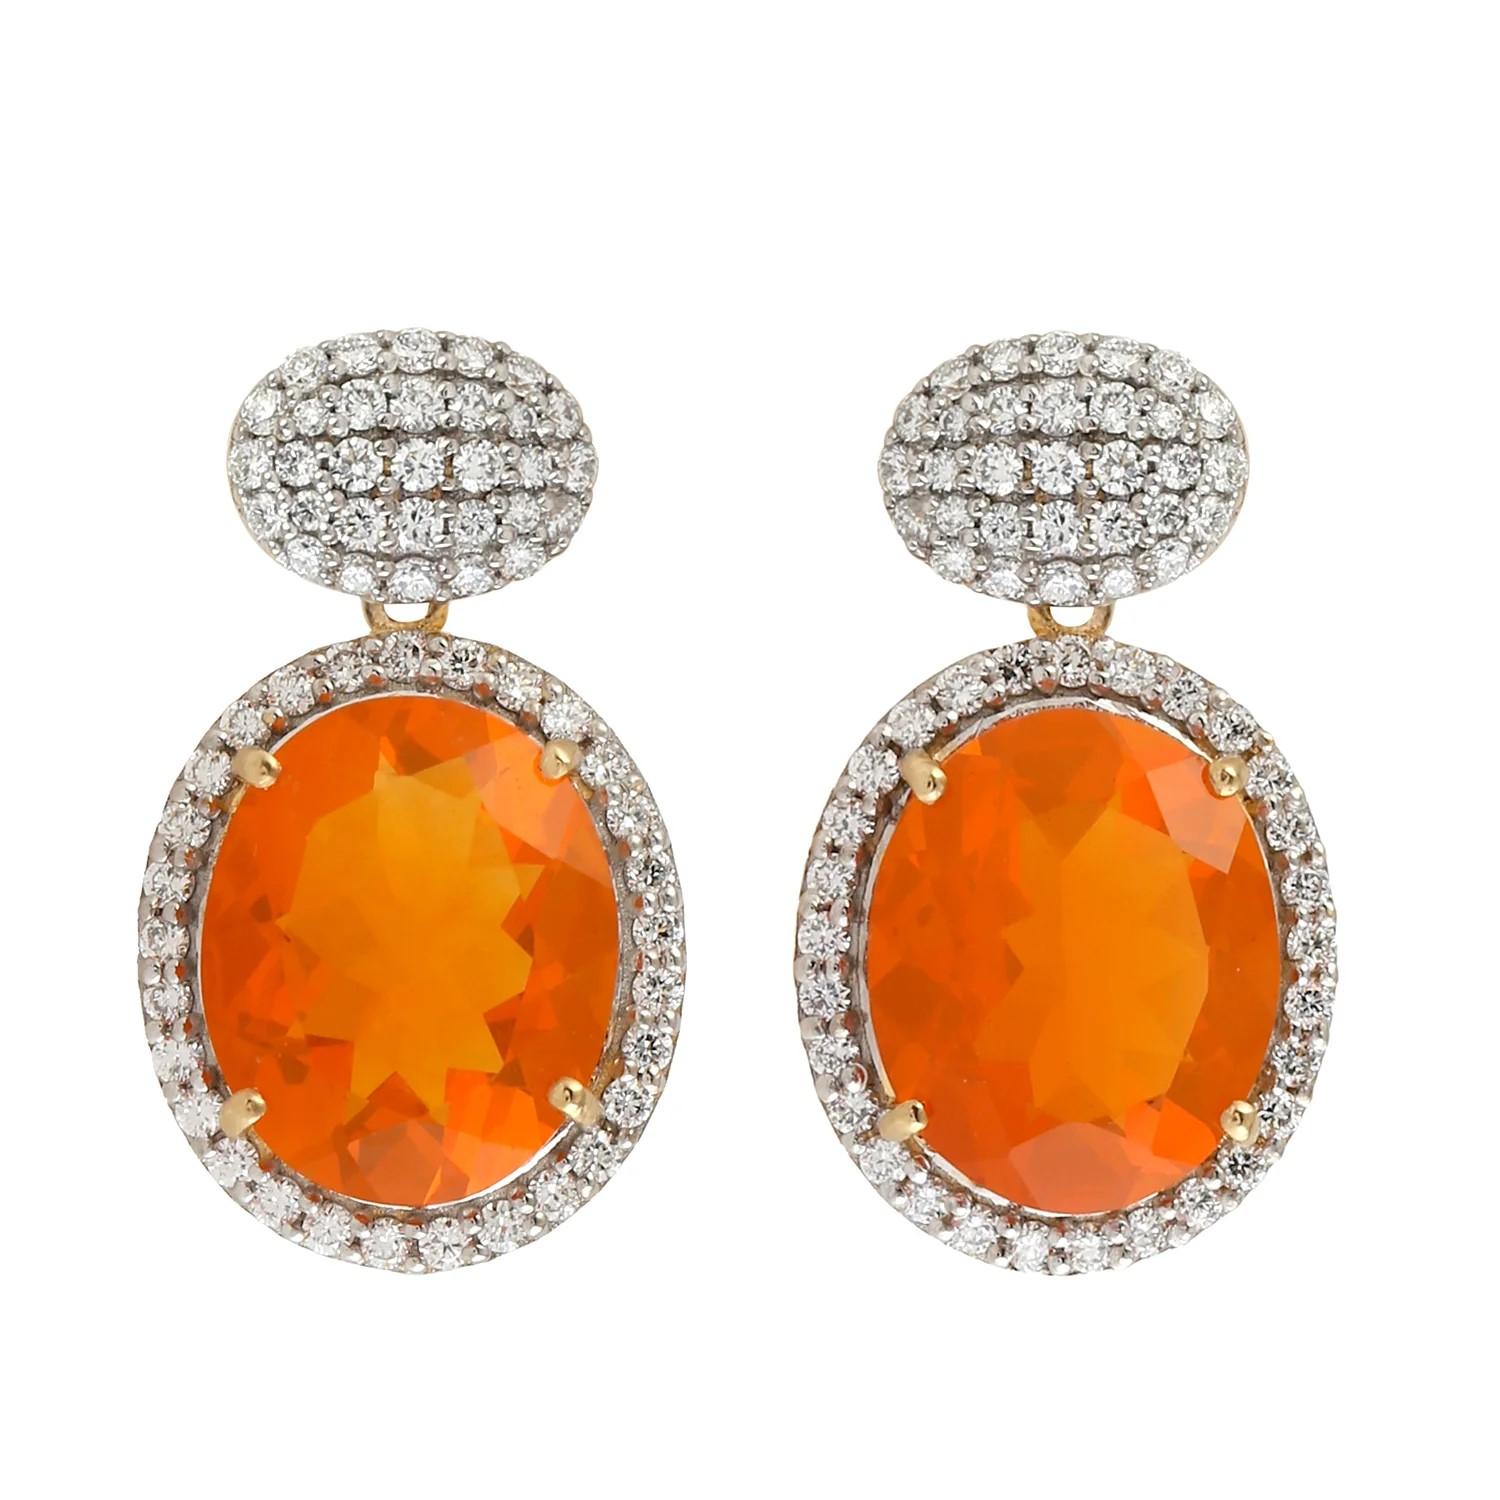 Contemporary Meghna Jewels 4.58 Carats Fire Opal Diamond 14 Karat Gold Earrings For Sale